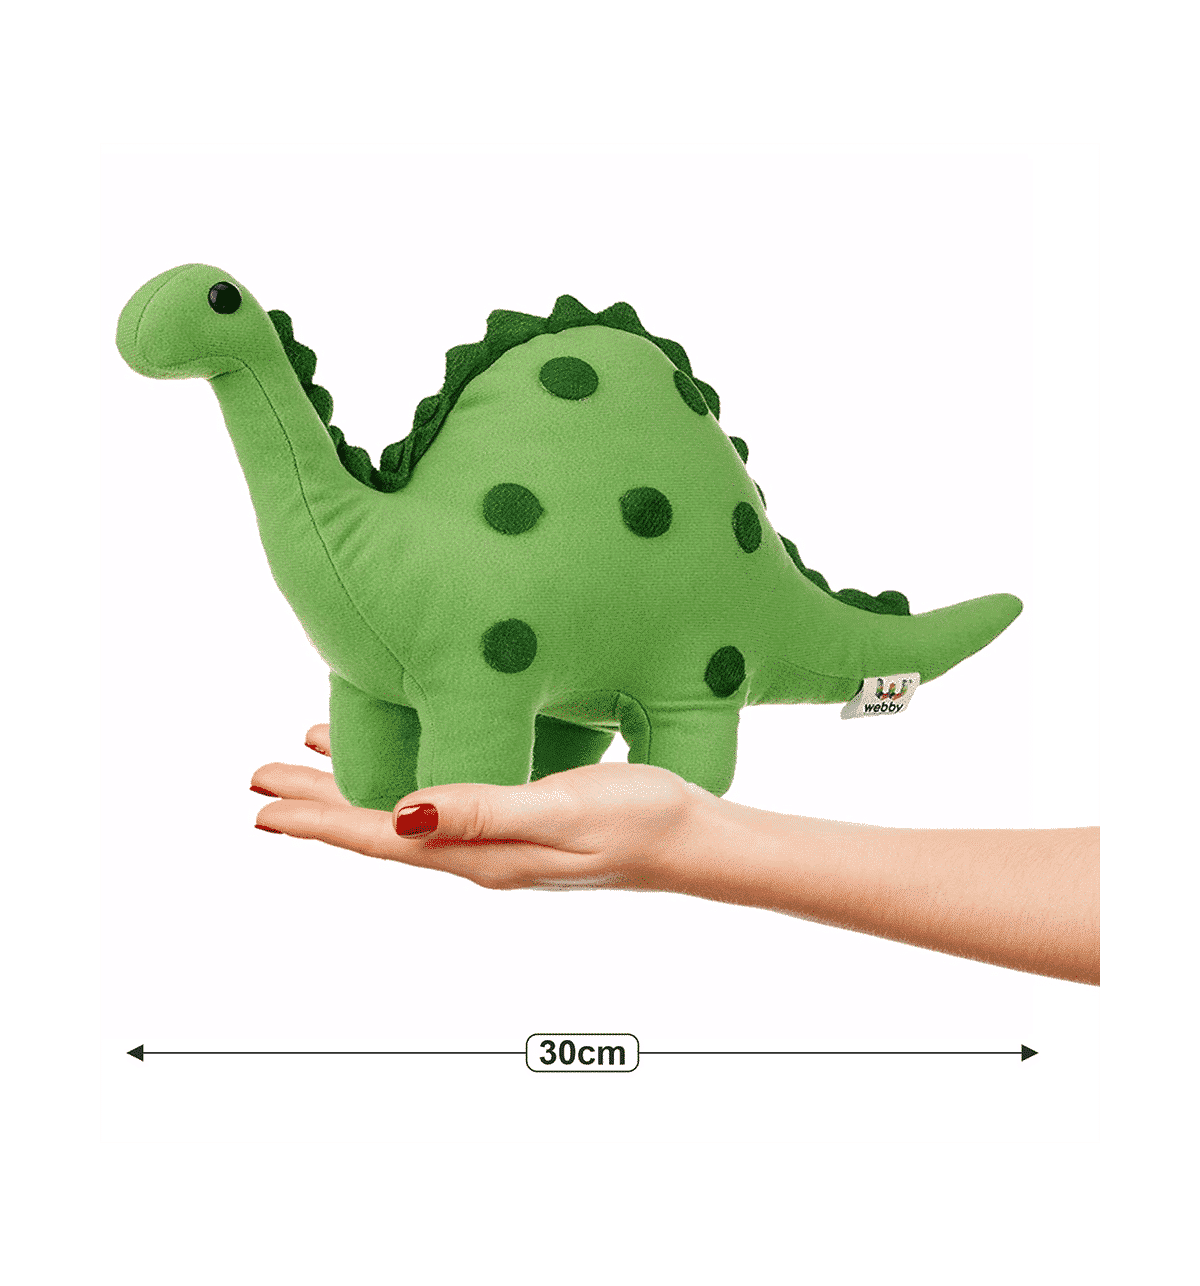 Buy Webby Webby Green Soft Dinosaur Plush Stuffed Toy 1 Piece